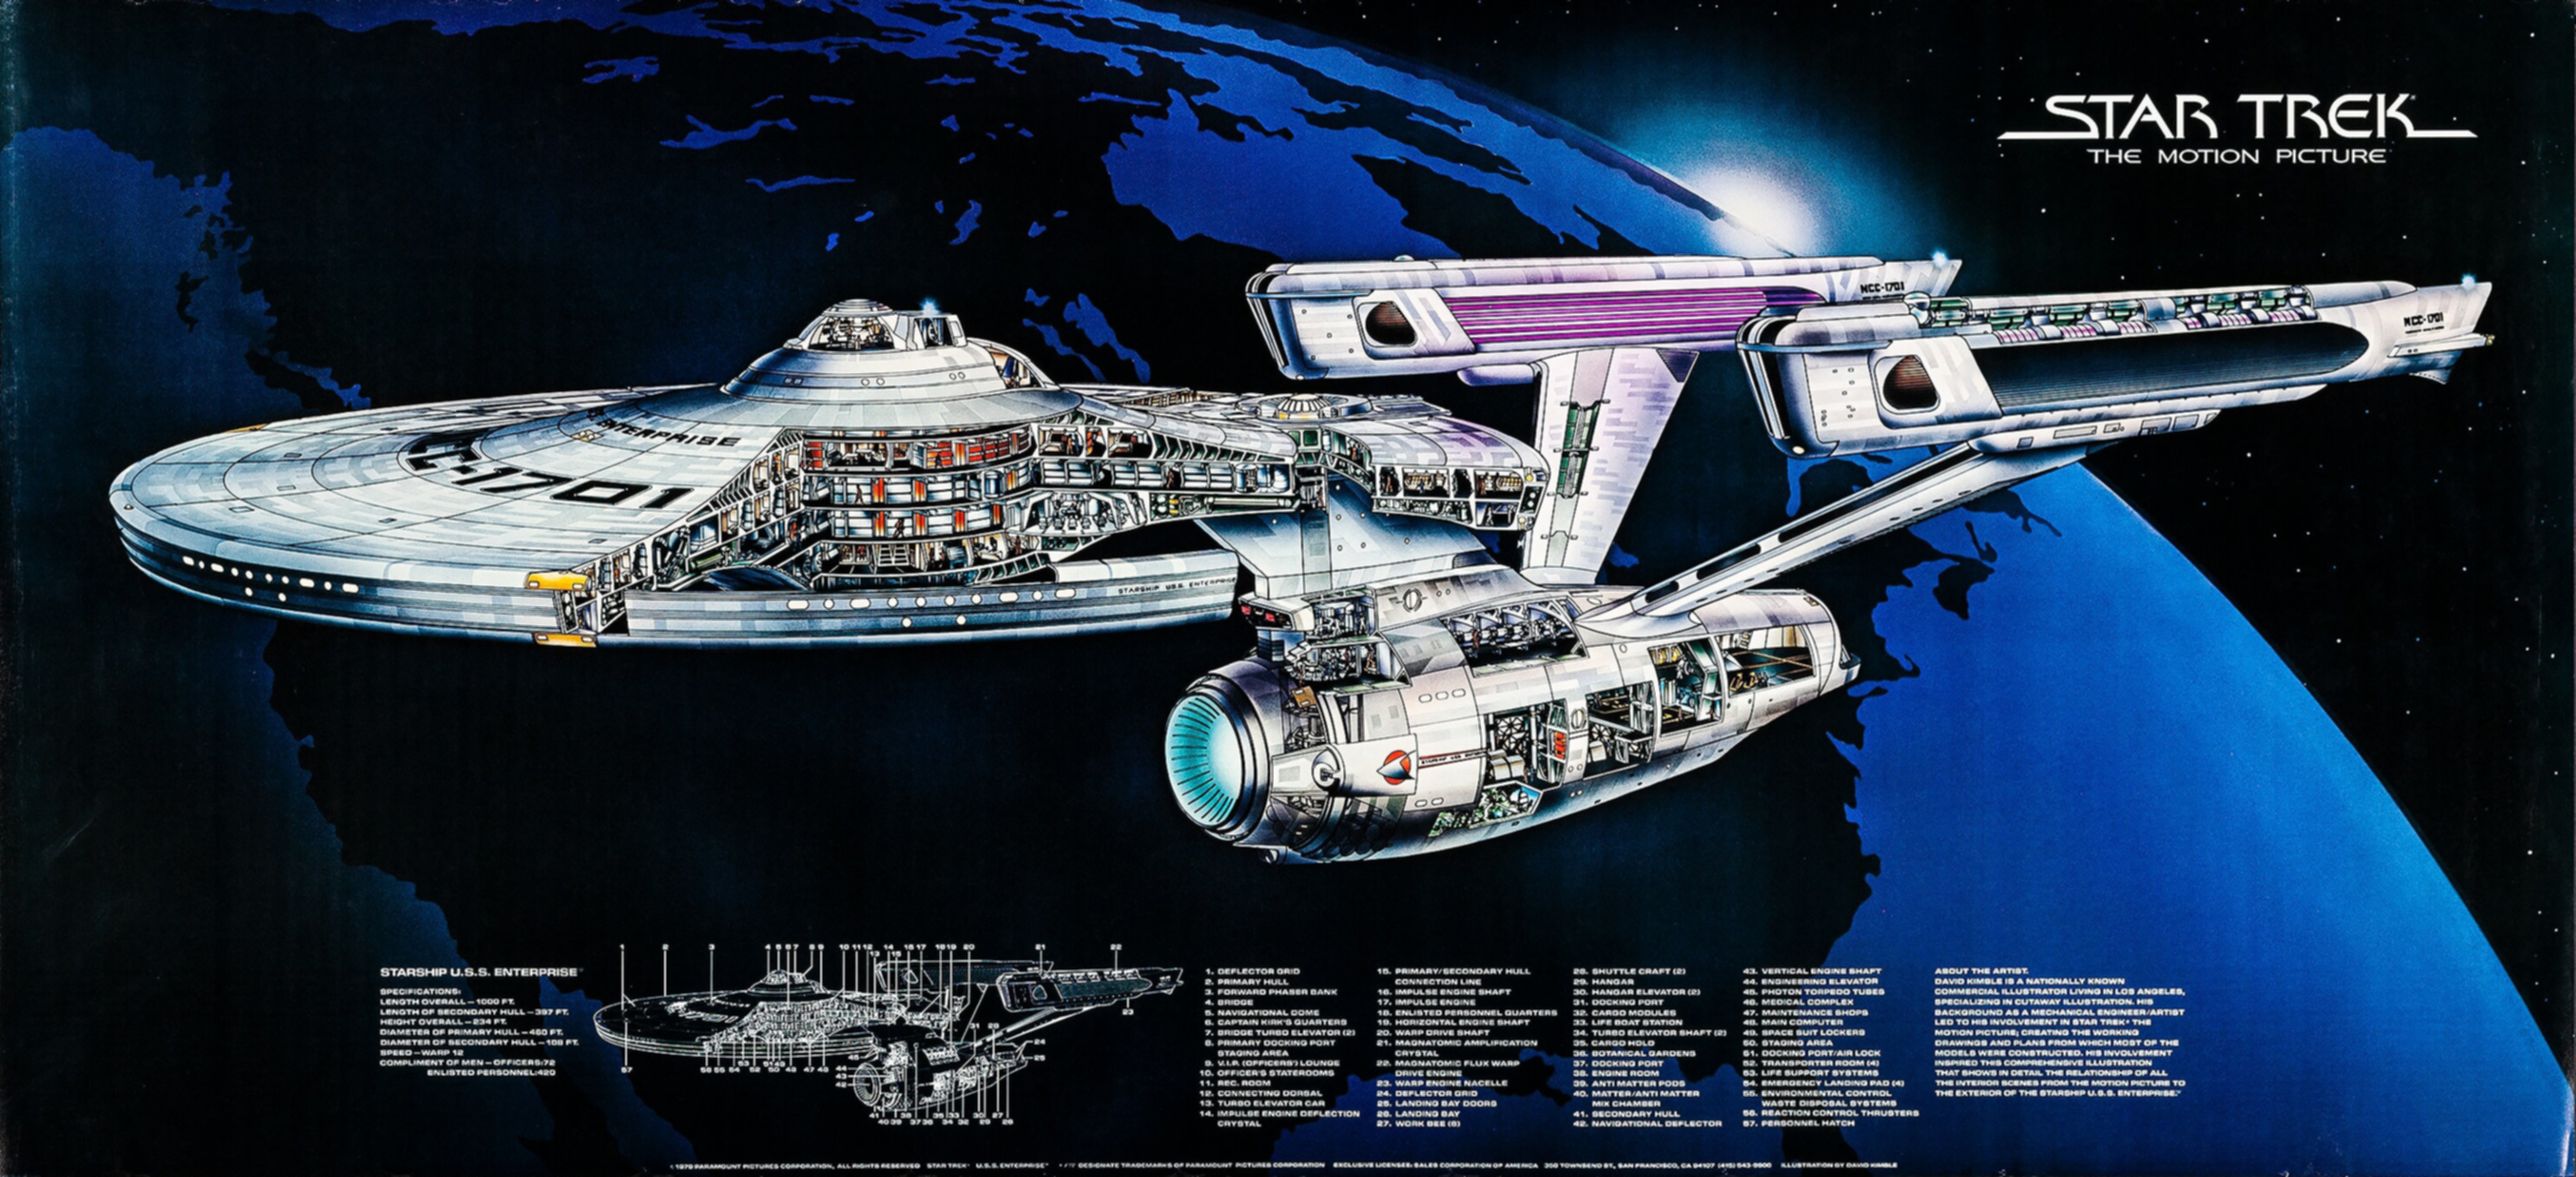 General 2839x1297 Star Trek Deck Plans Star Trek: The Motion Picture Star Trek Ships USS Enterprise NCC-1701 movies science fiction spaceship vehicle Constitution Class Refit